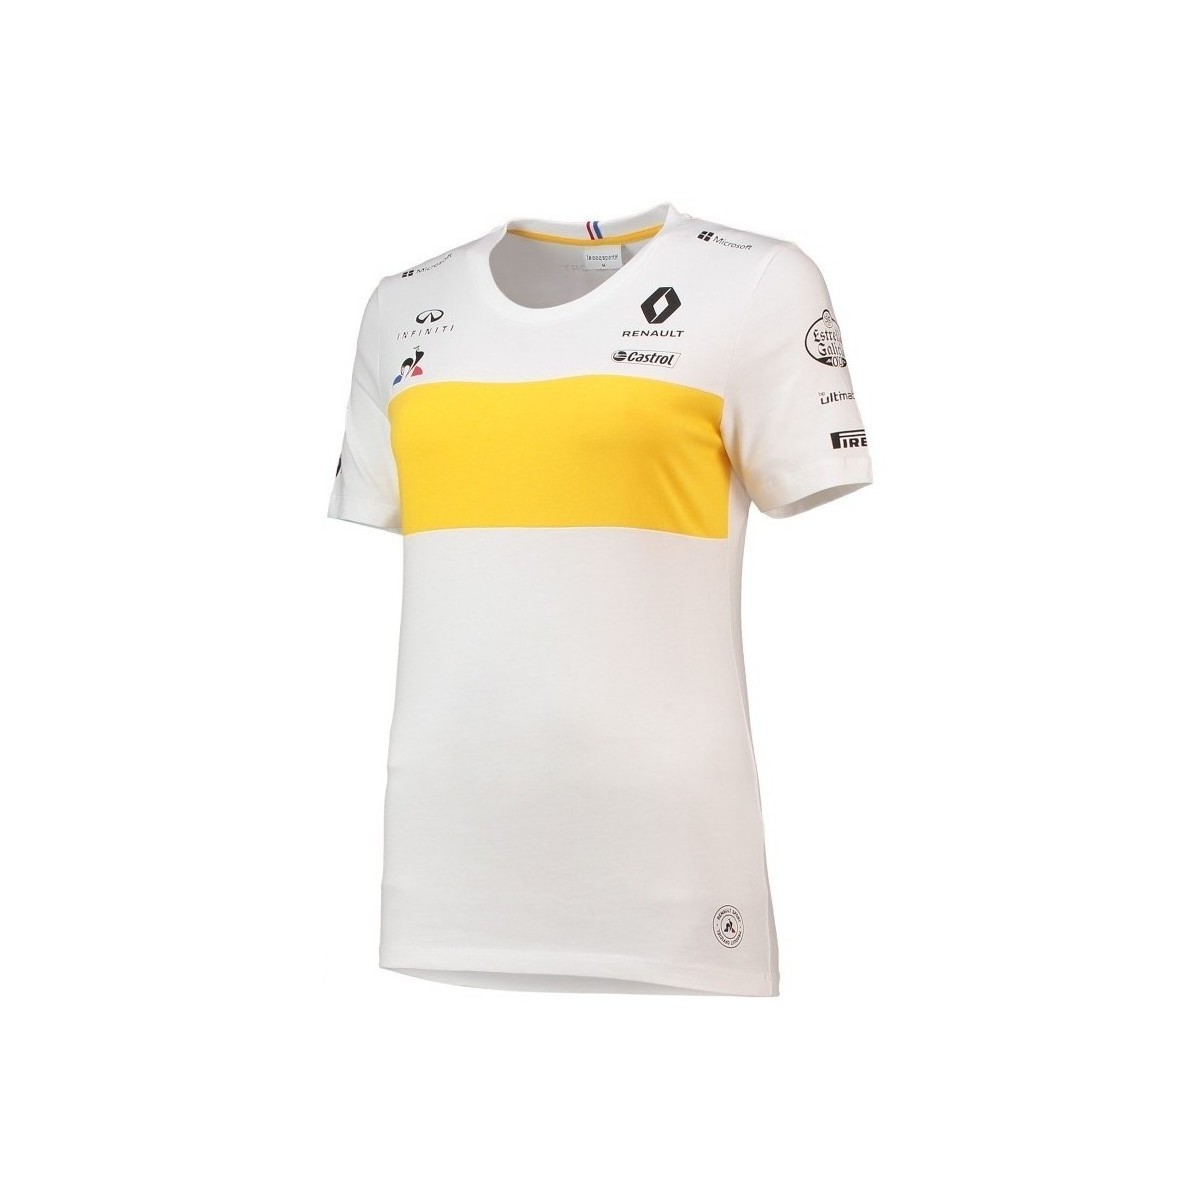 Vêtements Homme T-shirts manches courtes Le Coq Sportif COQ SPORTIF - Tee-shirt - blanc Blanc